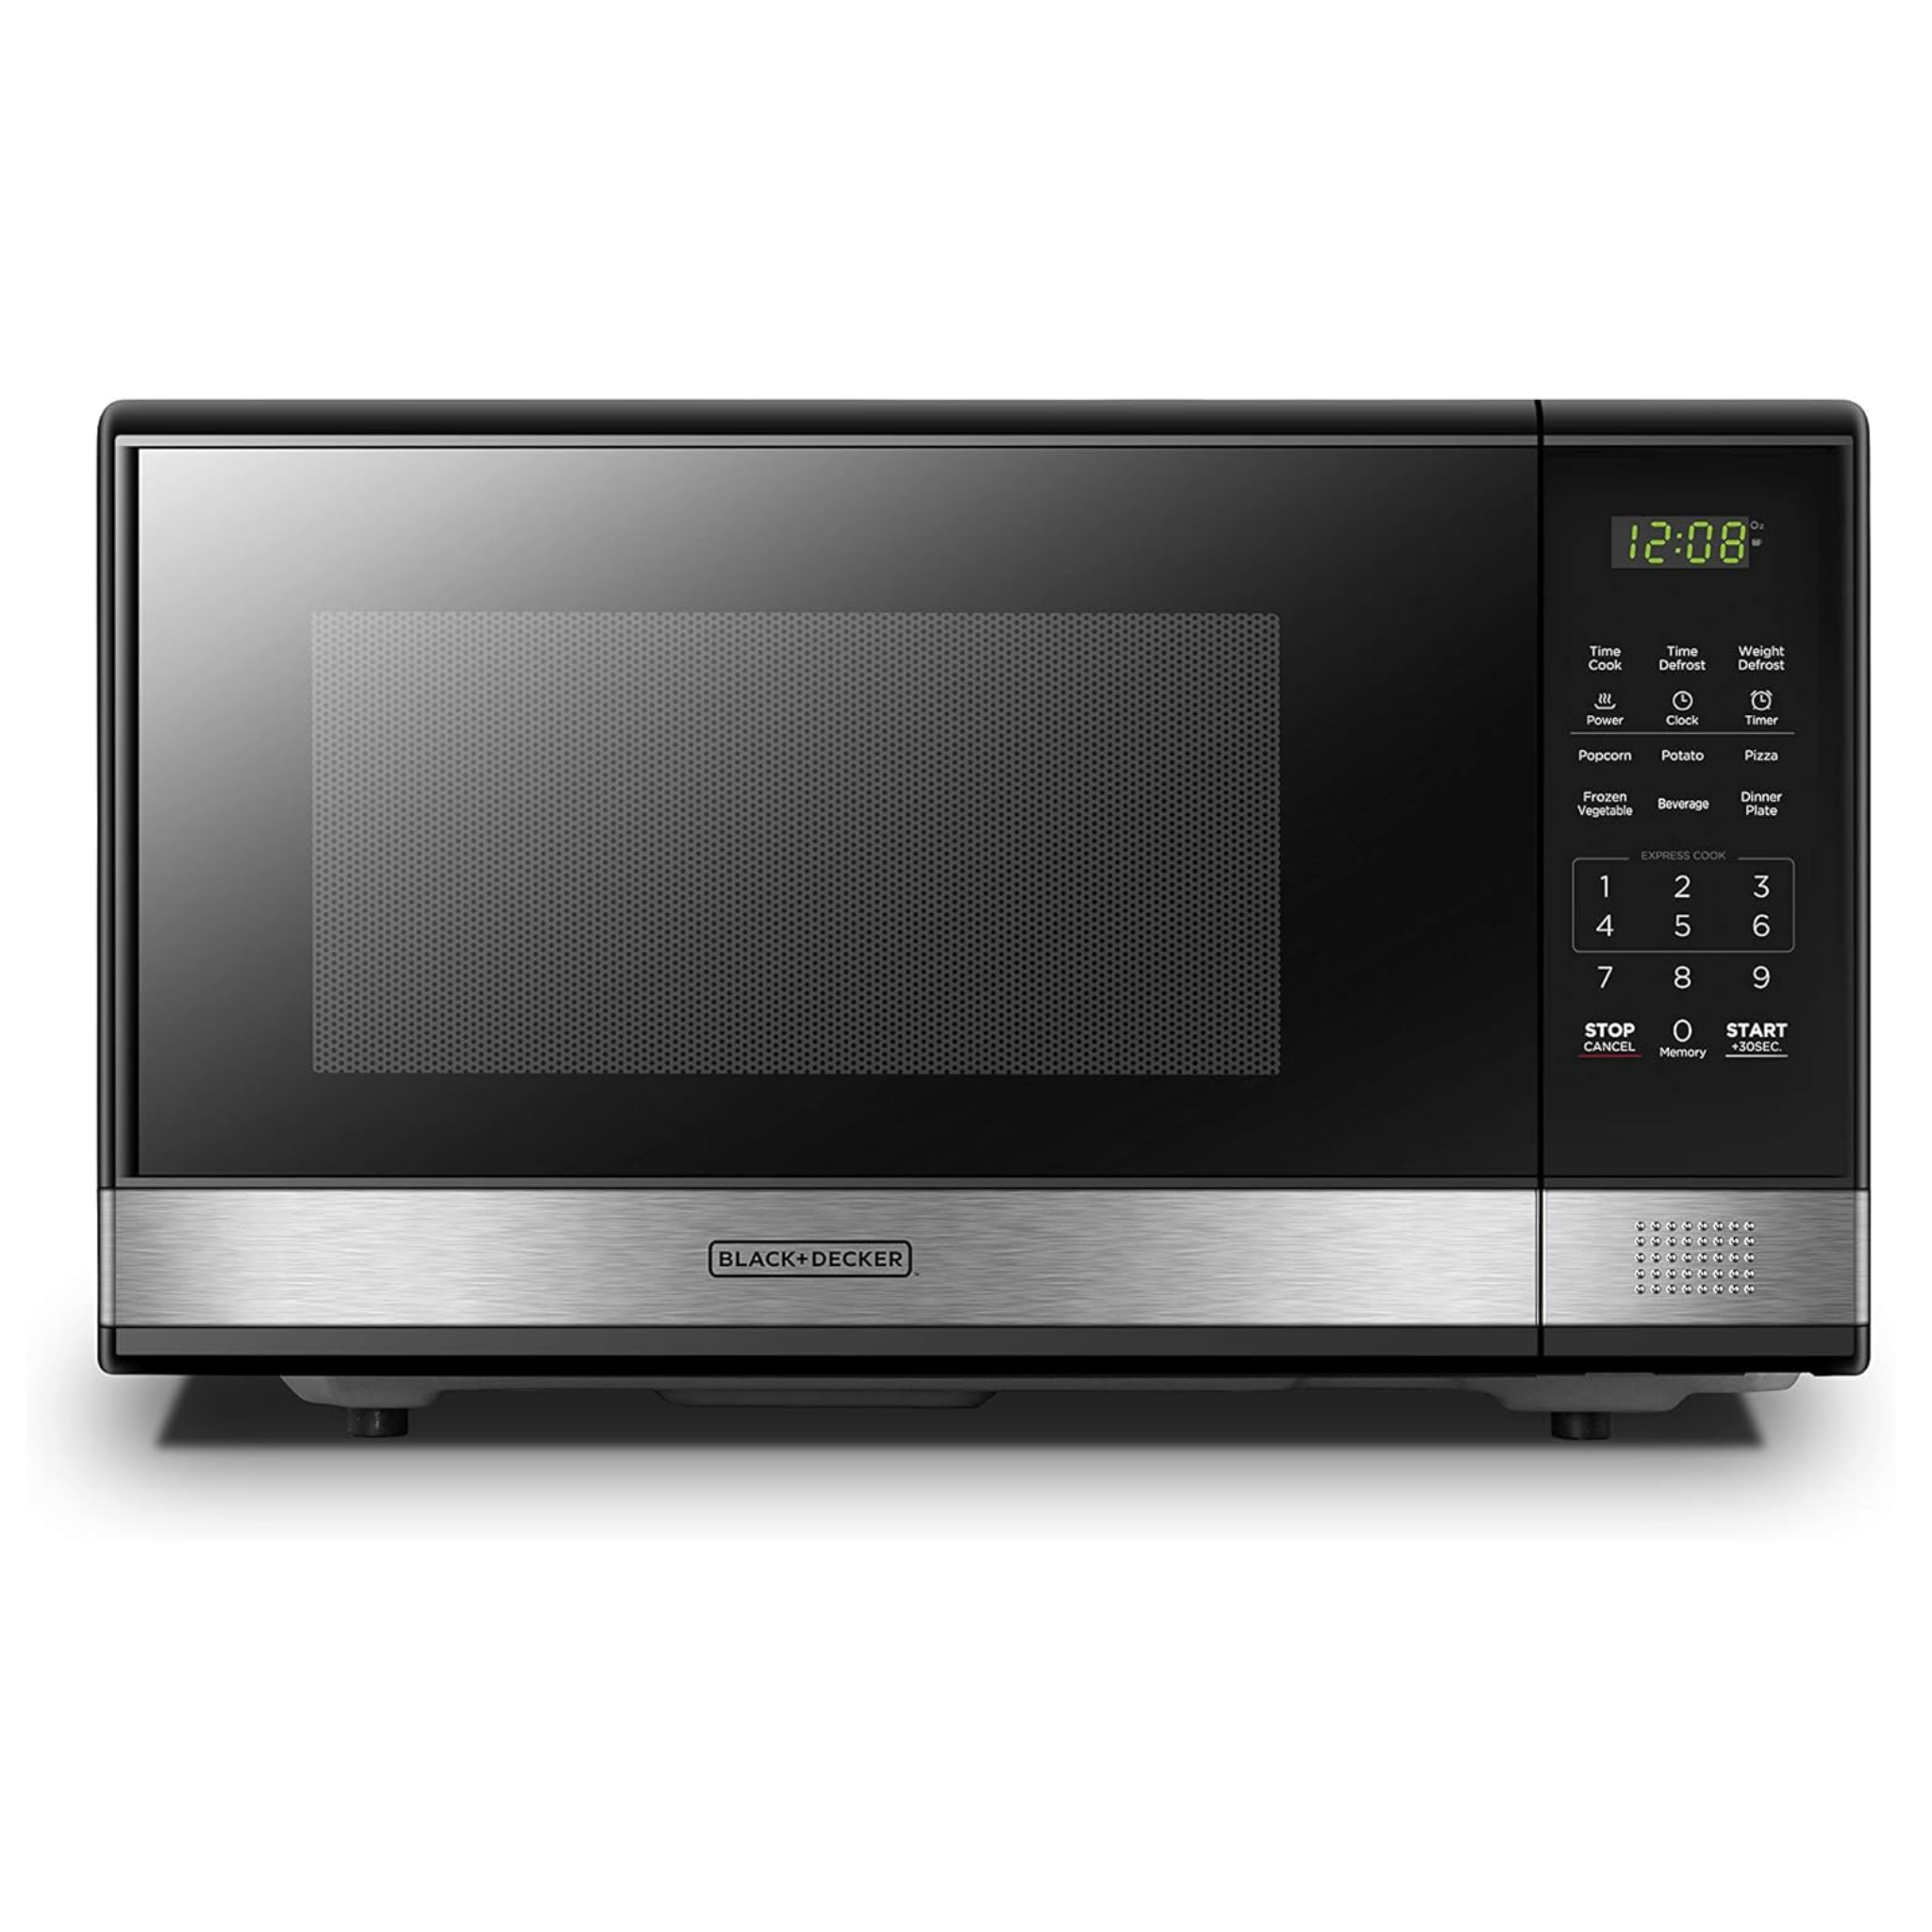 LACK+DECKER 1000W 1.1cu.ft Digital Microwave Oven